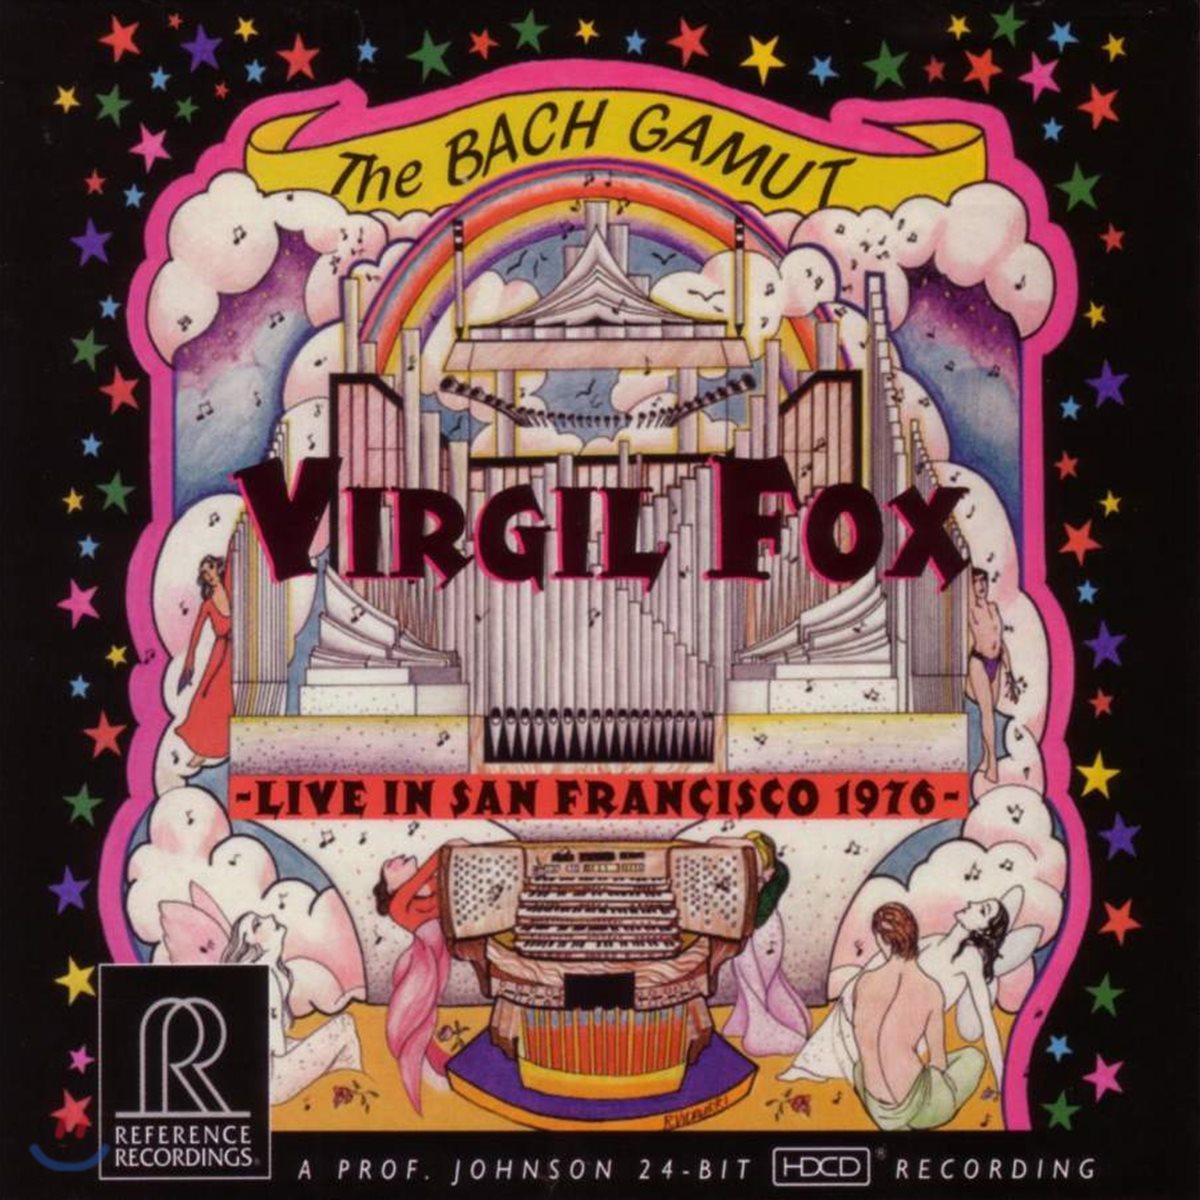 Virgil Fox 버질 폭스 1976년 샌프란시스코 라이브 (The Bach Gamut - LIVE in San Francisco 1976)